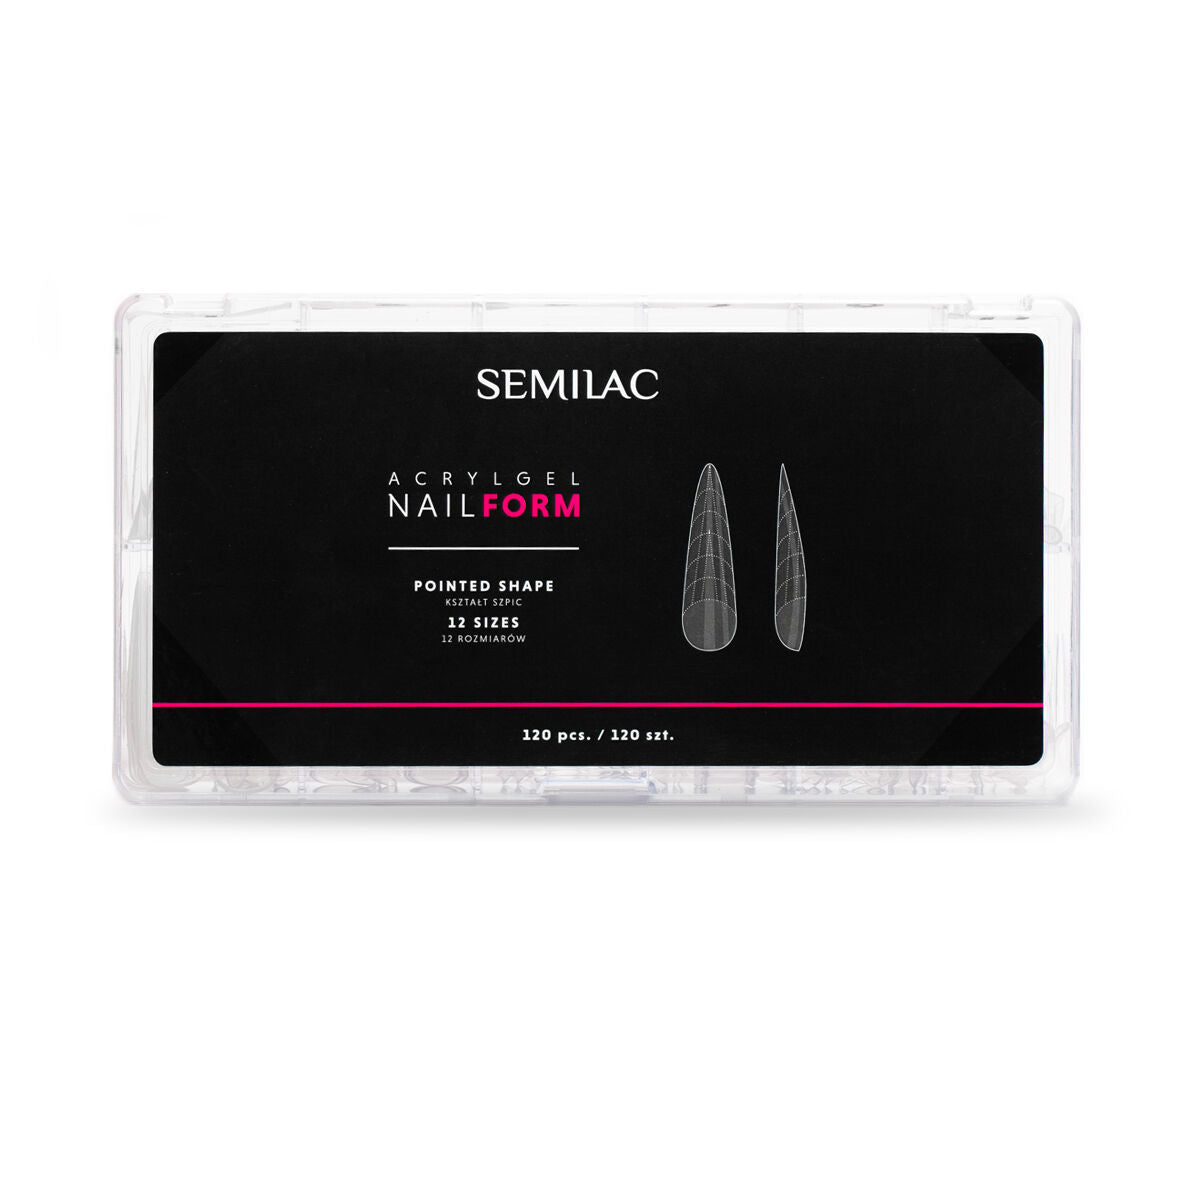 Semilac Acrylgel Nail Form Pointed 120 Pcs. - Semilac UK